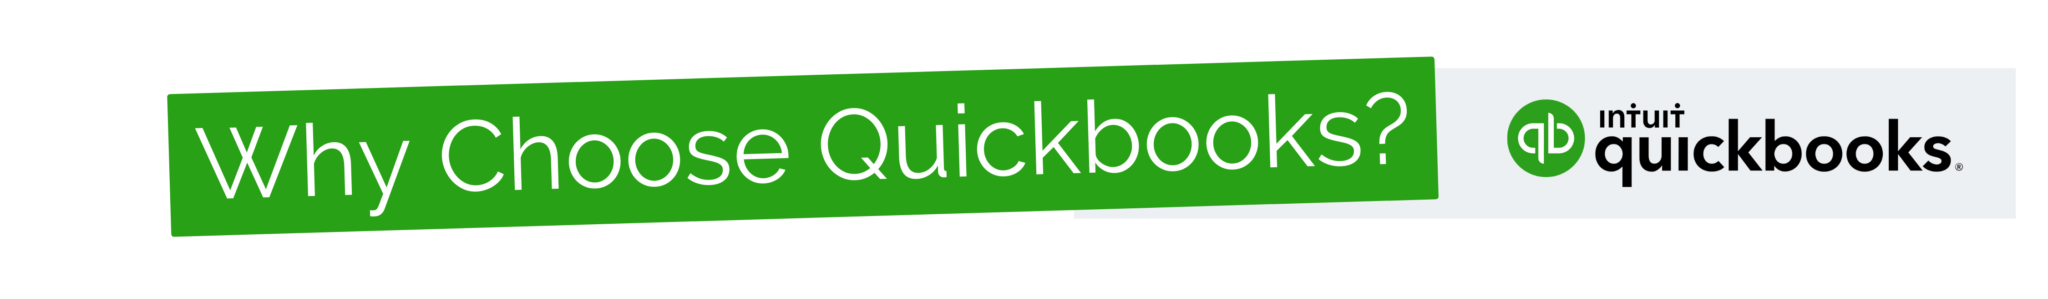 Why Choose Quickbooks?